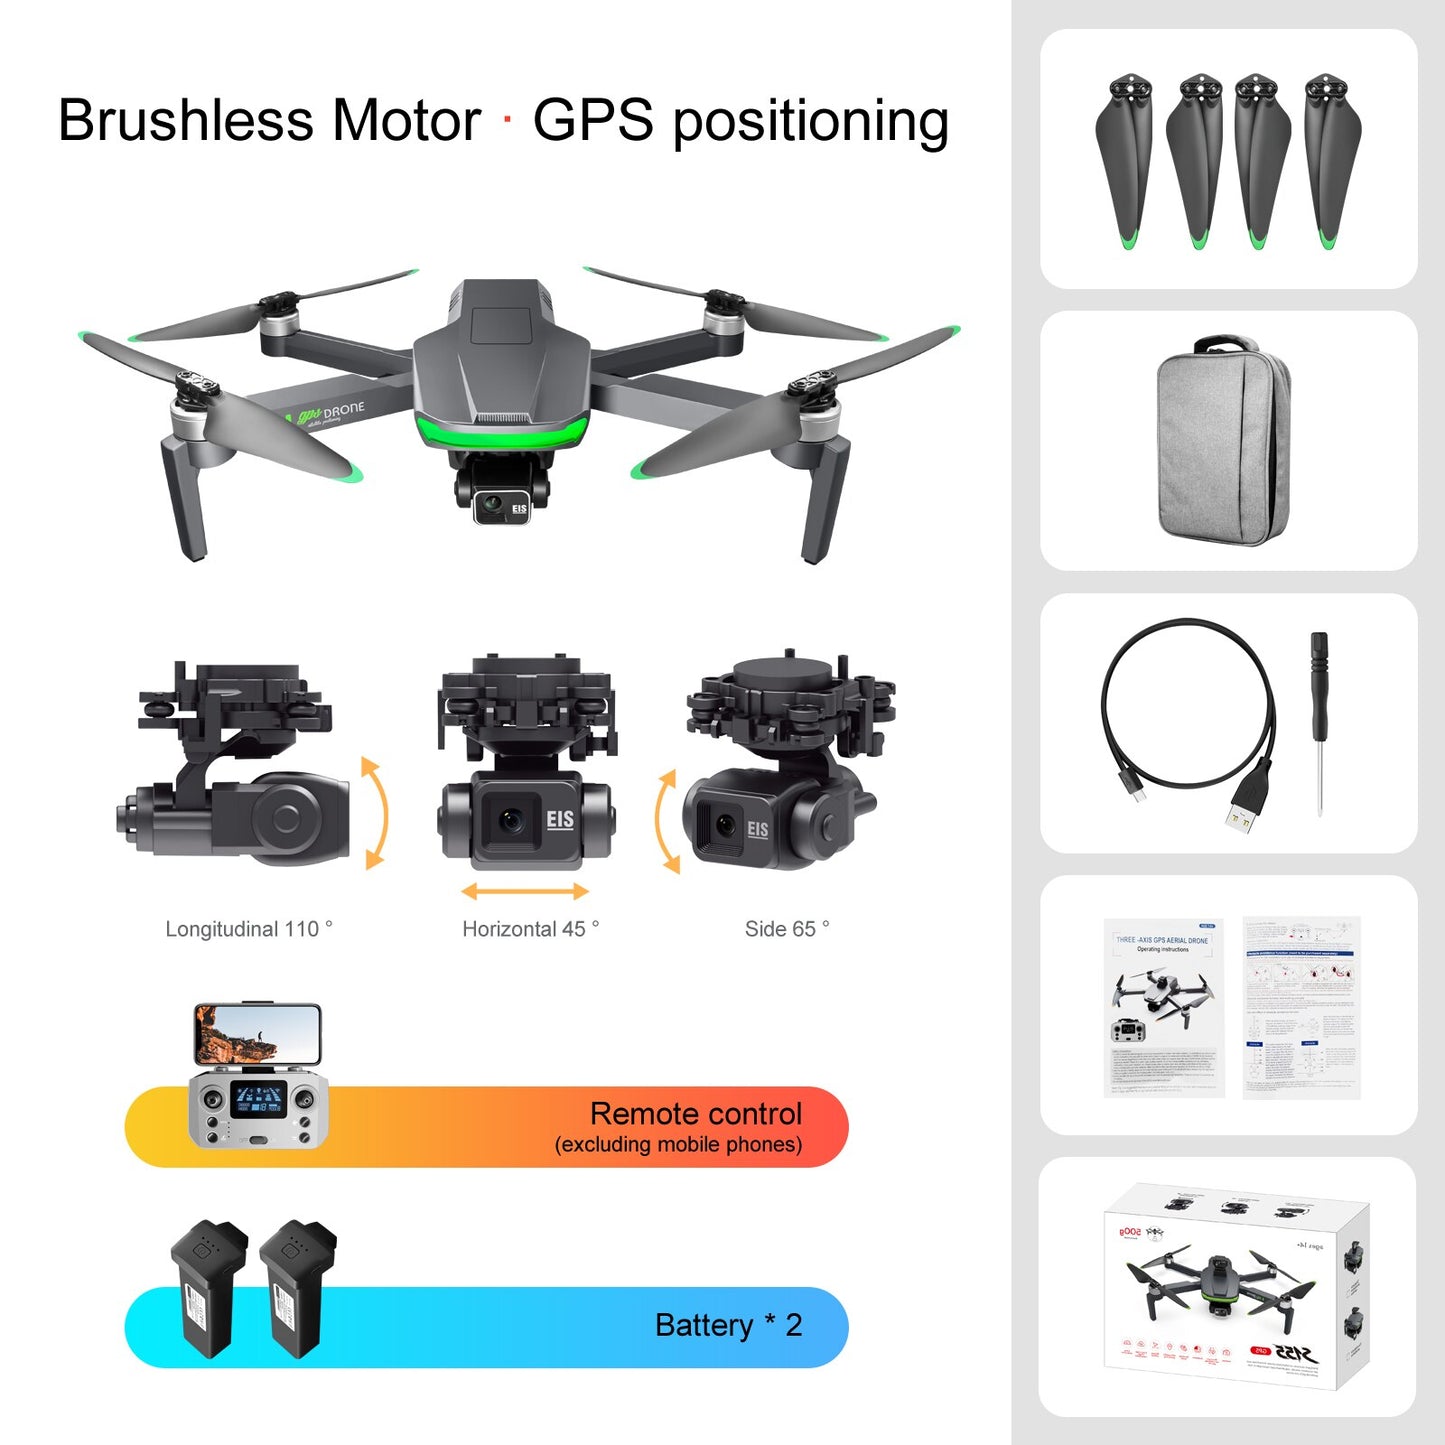 S155 Drone, Brushless Motor GPS positioning 0 EIS EIS Longitu